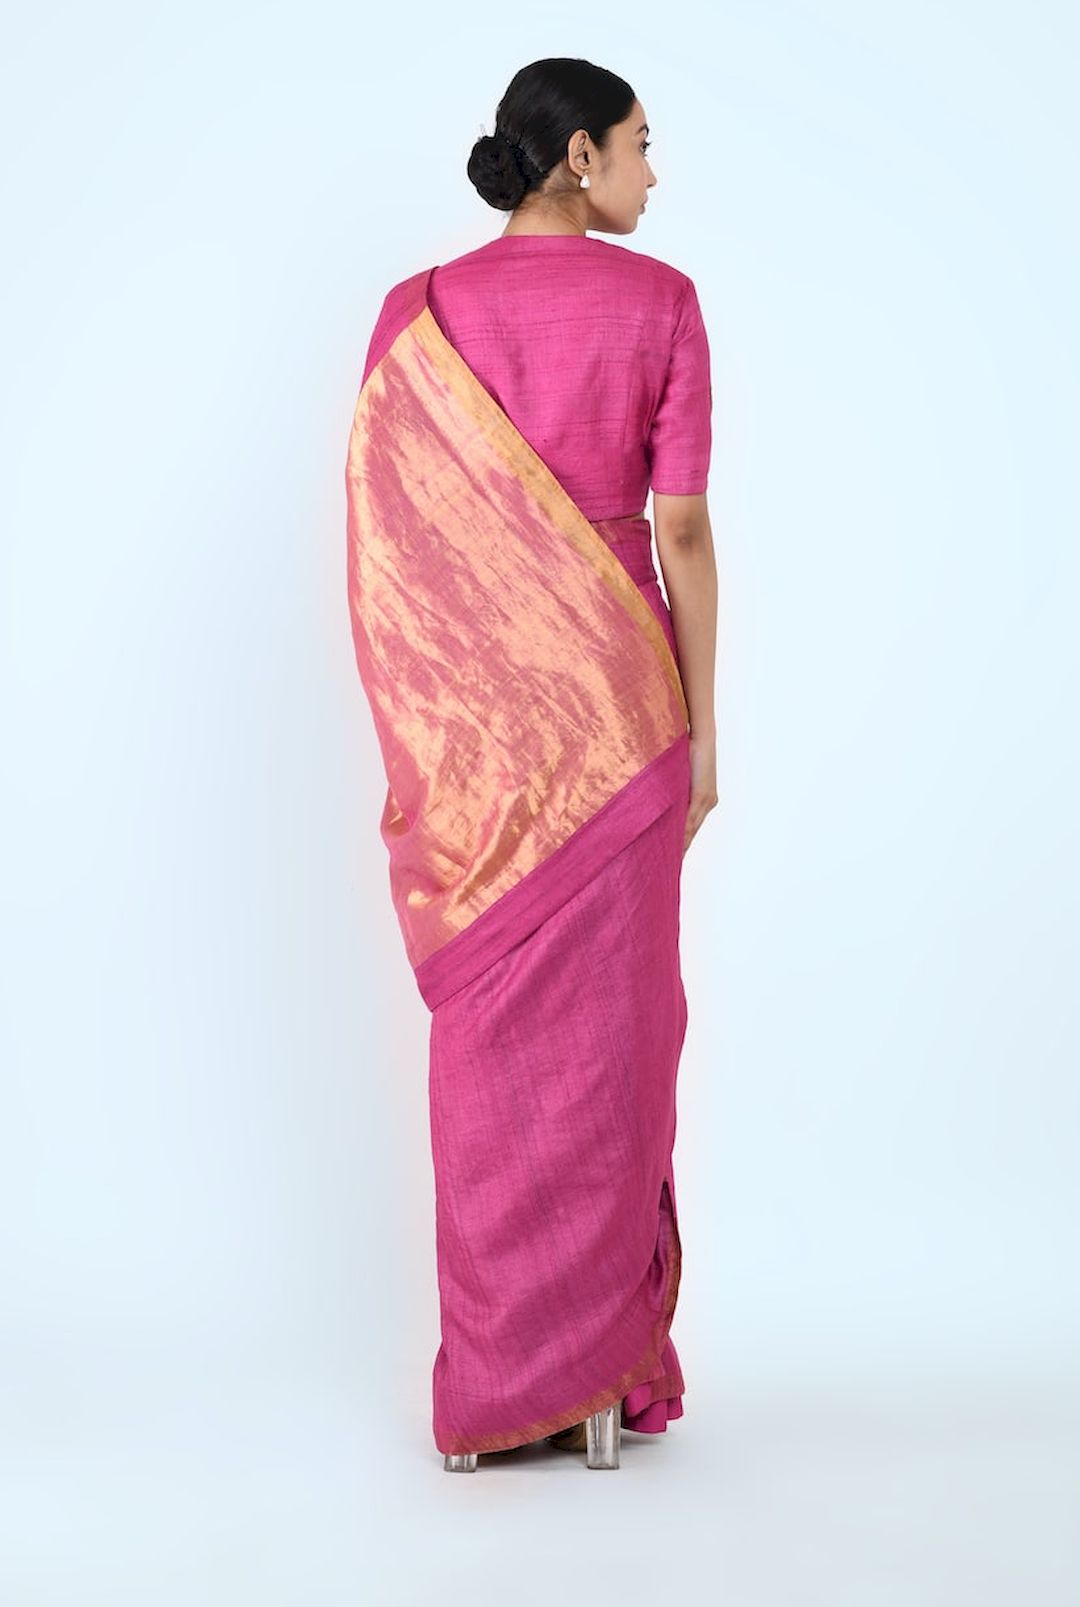 Tussar Silk Sari With Blouse (Rani Pink) - Prashant Chouhan